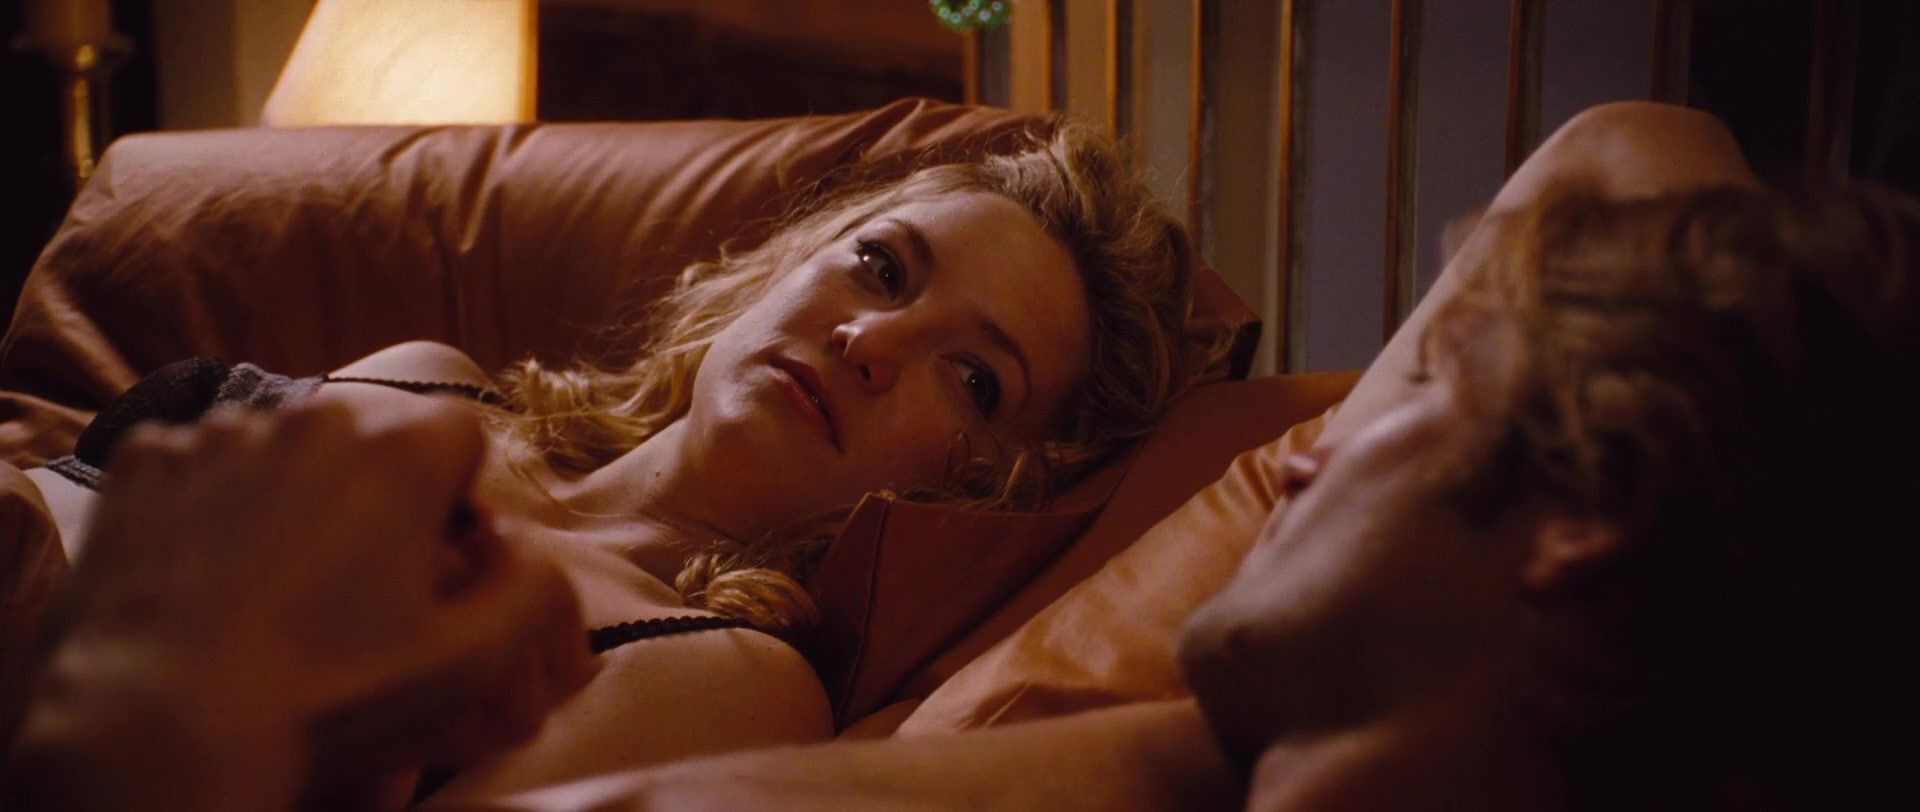 Family Roleplay Kate Hudson - A Little Bit of Heaven (2012) Teensnow